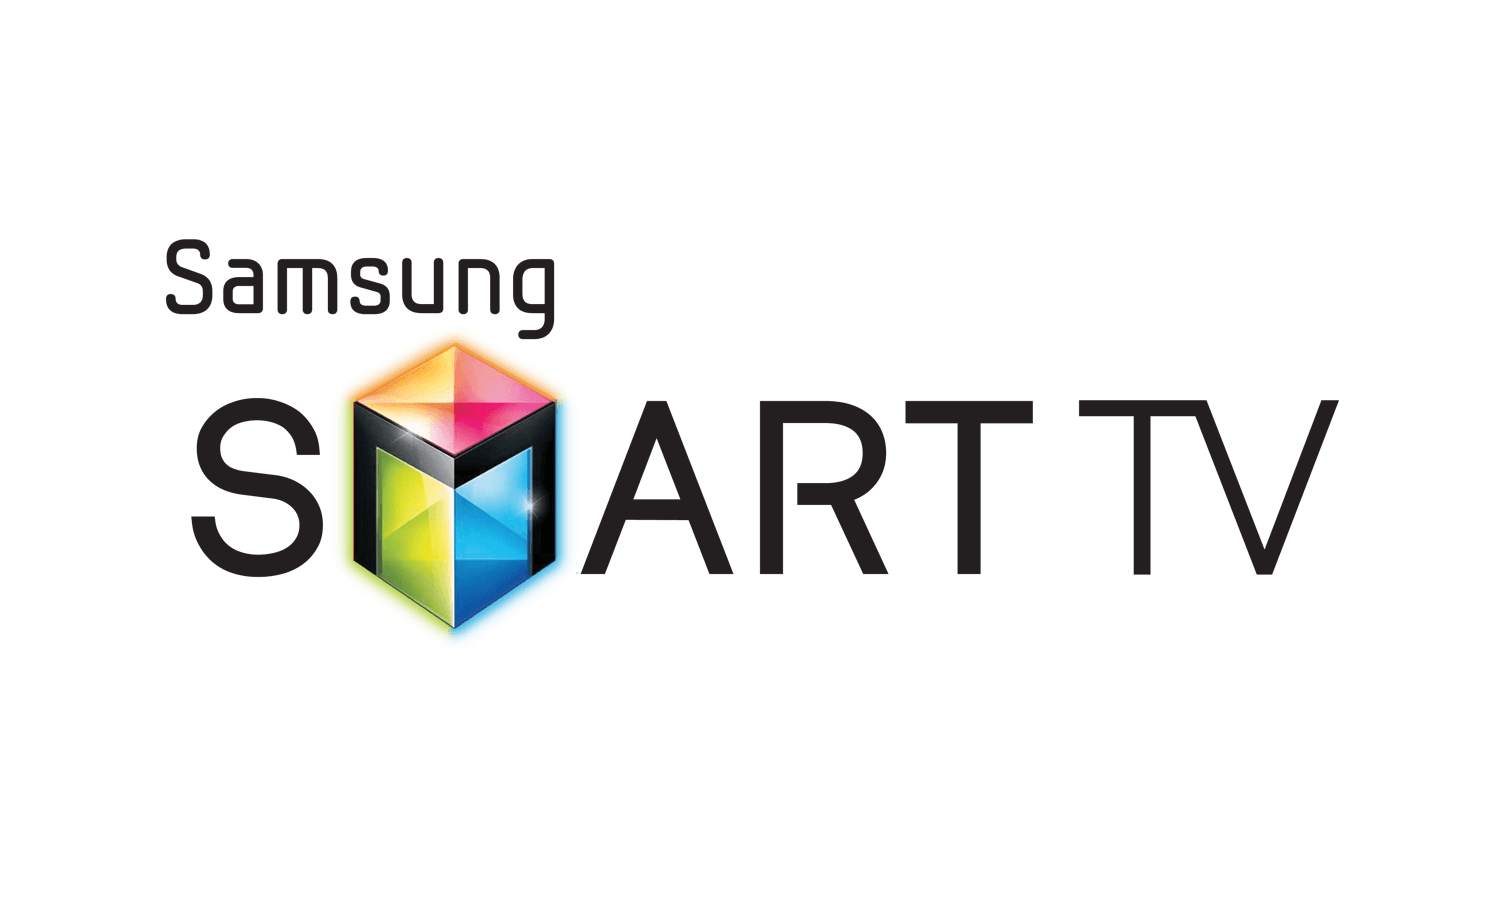 SamsungTelevisions Logo - Best Samsung Smart TV VPN For Entertainment and Security